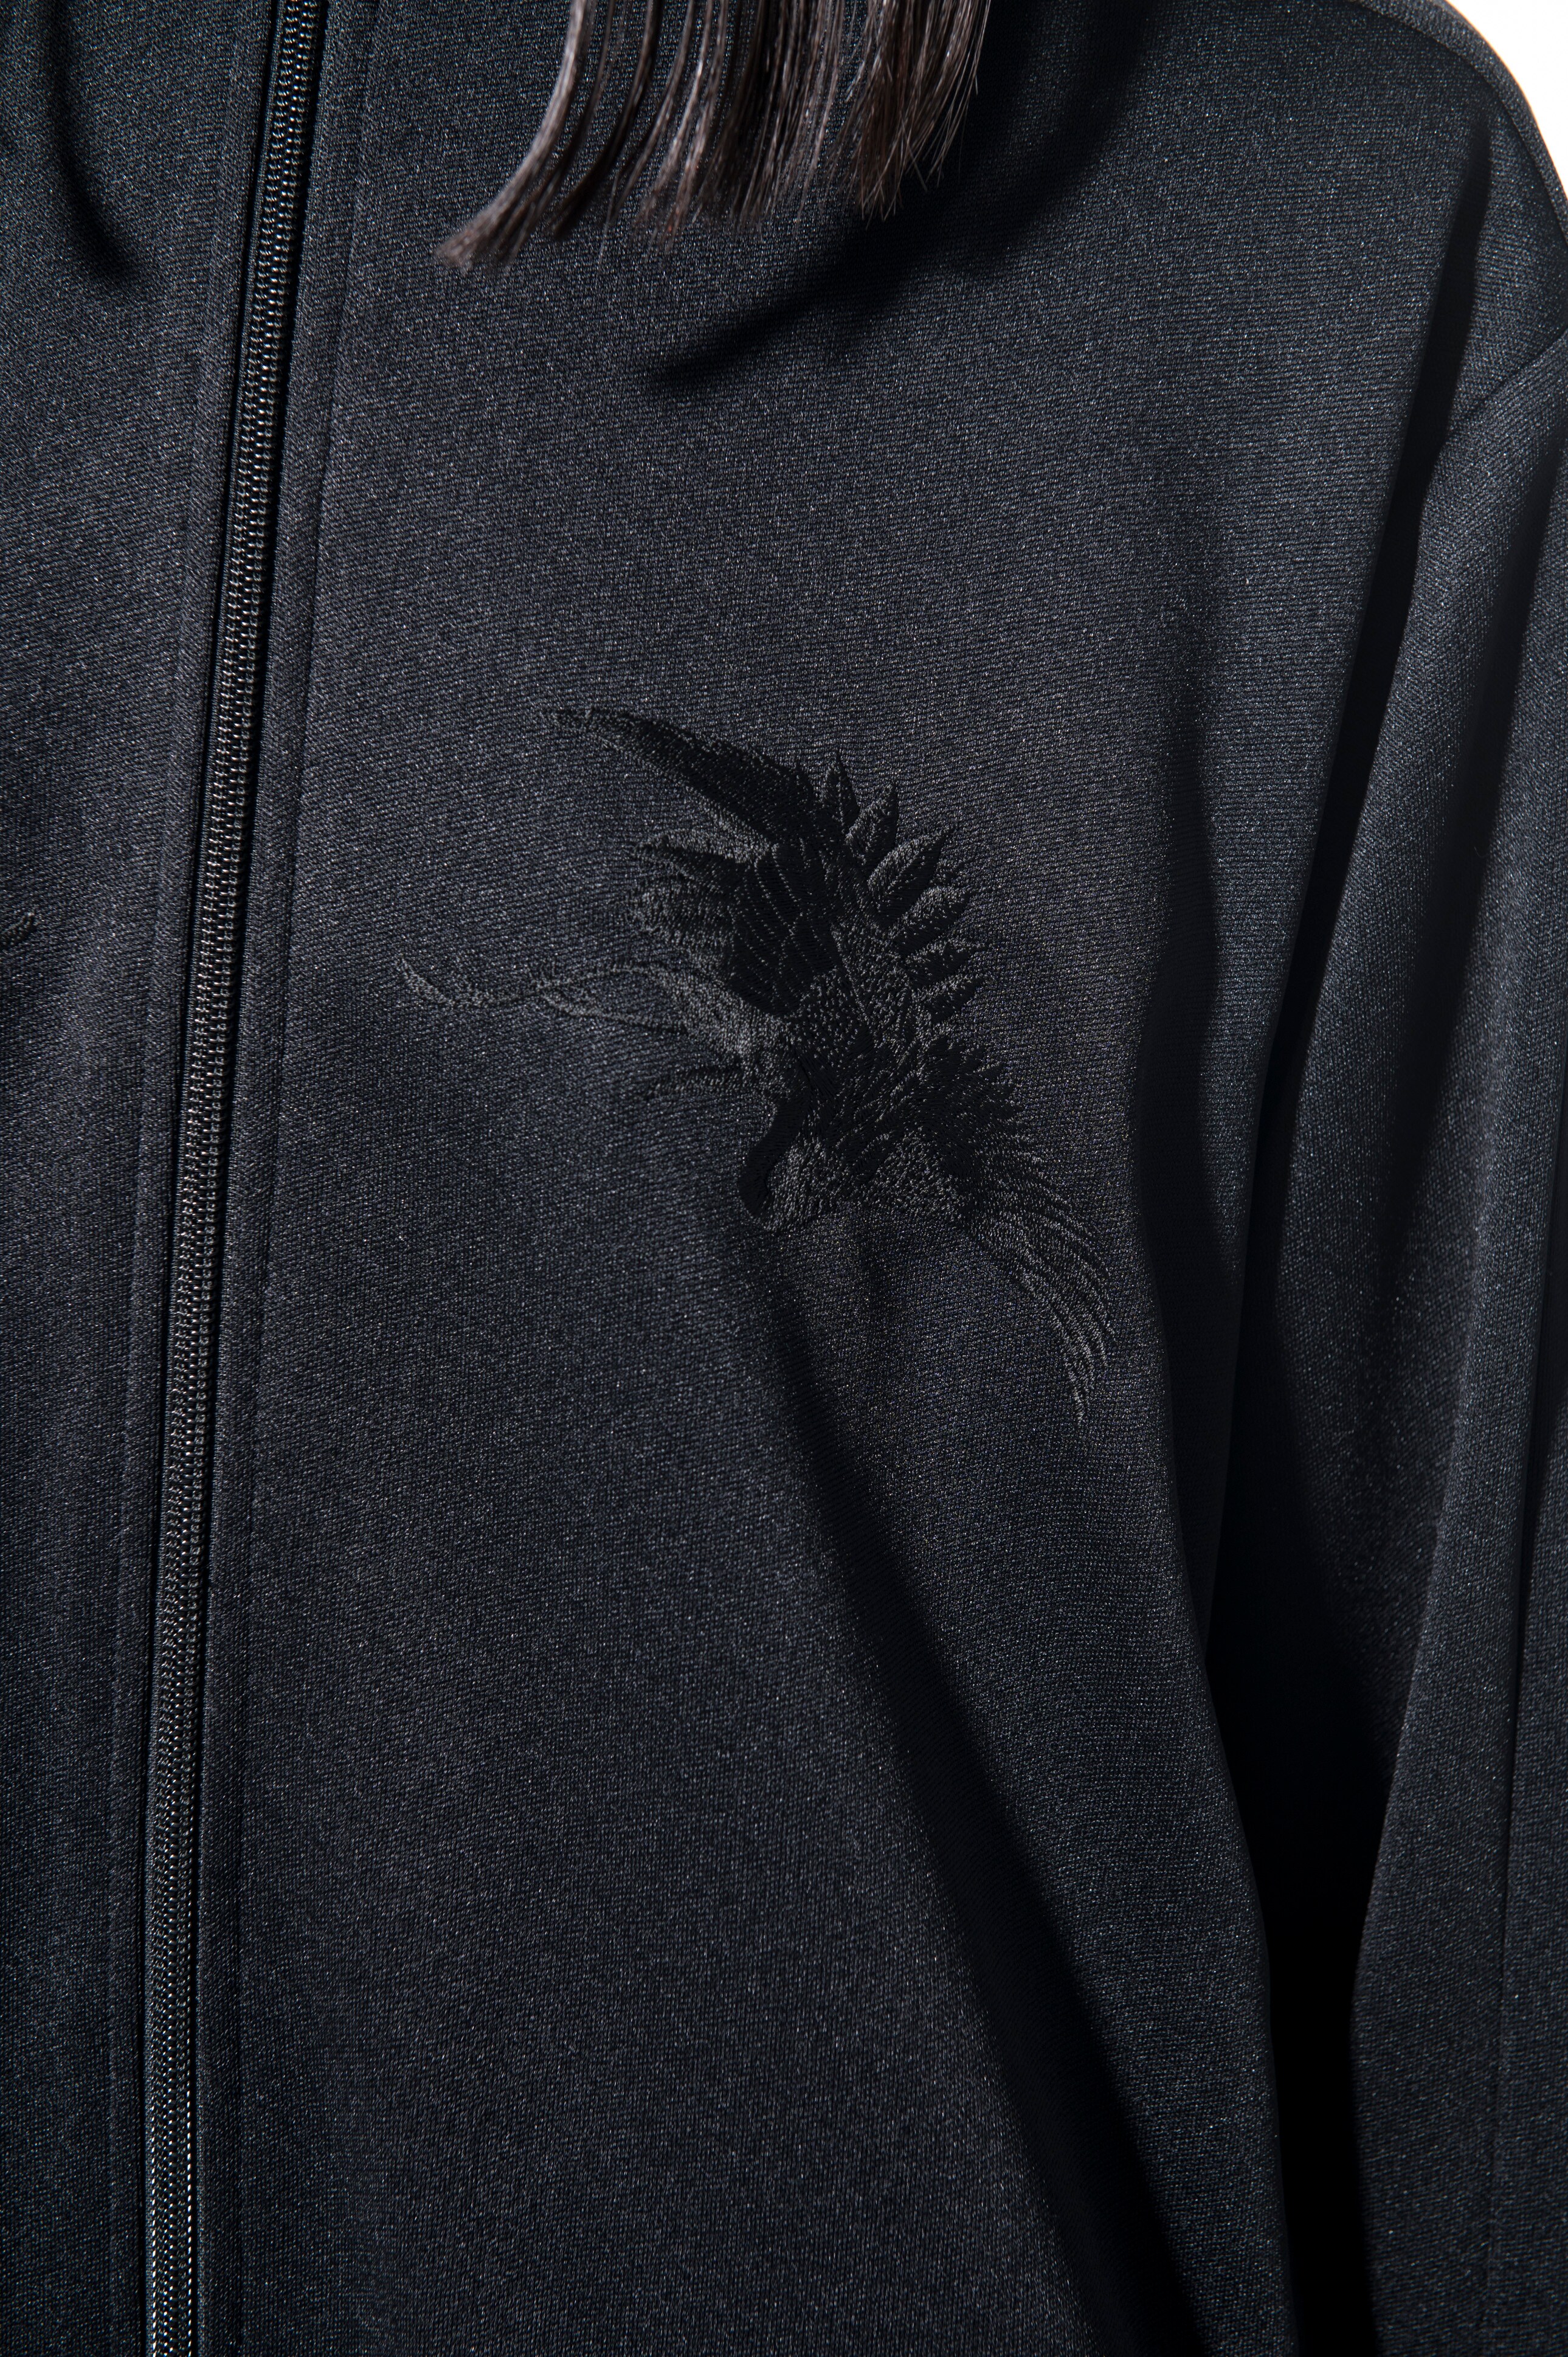 Pe/Smooth Jersey Crane Embroidery Hem Rib Track Jacket